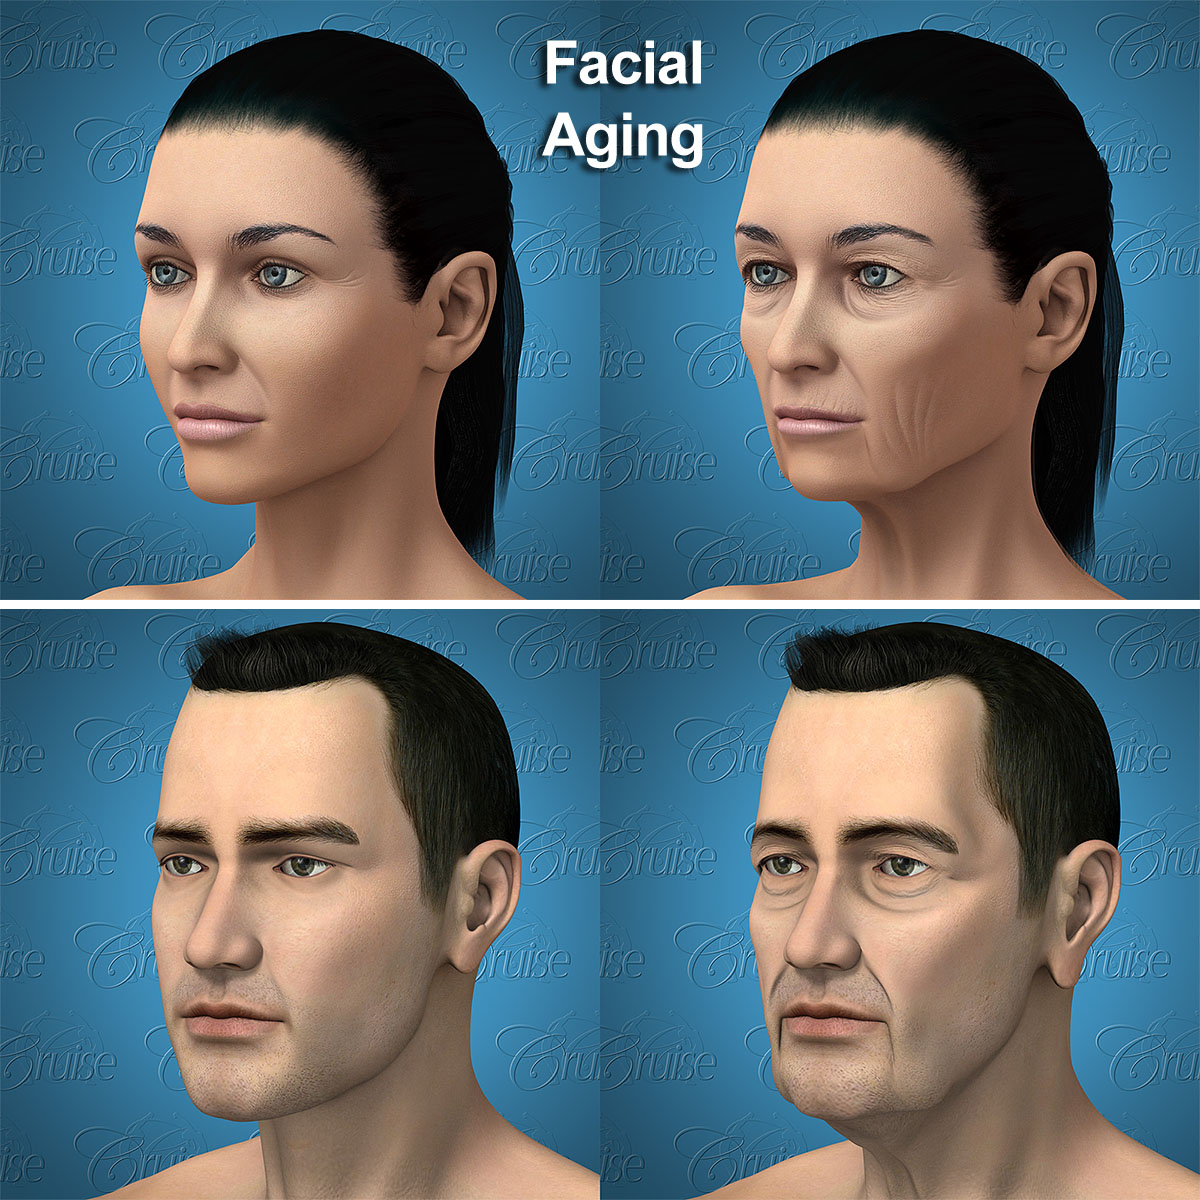 Facial aging